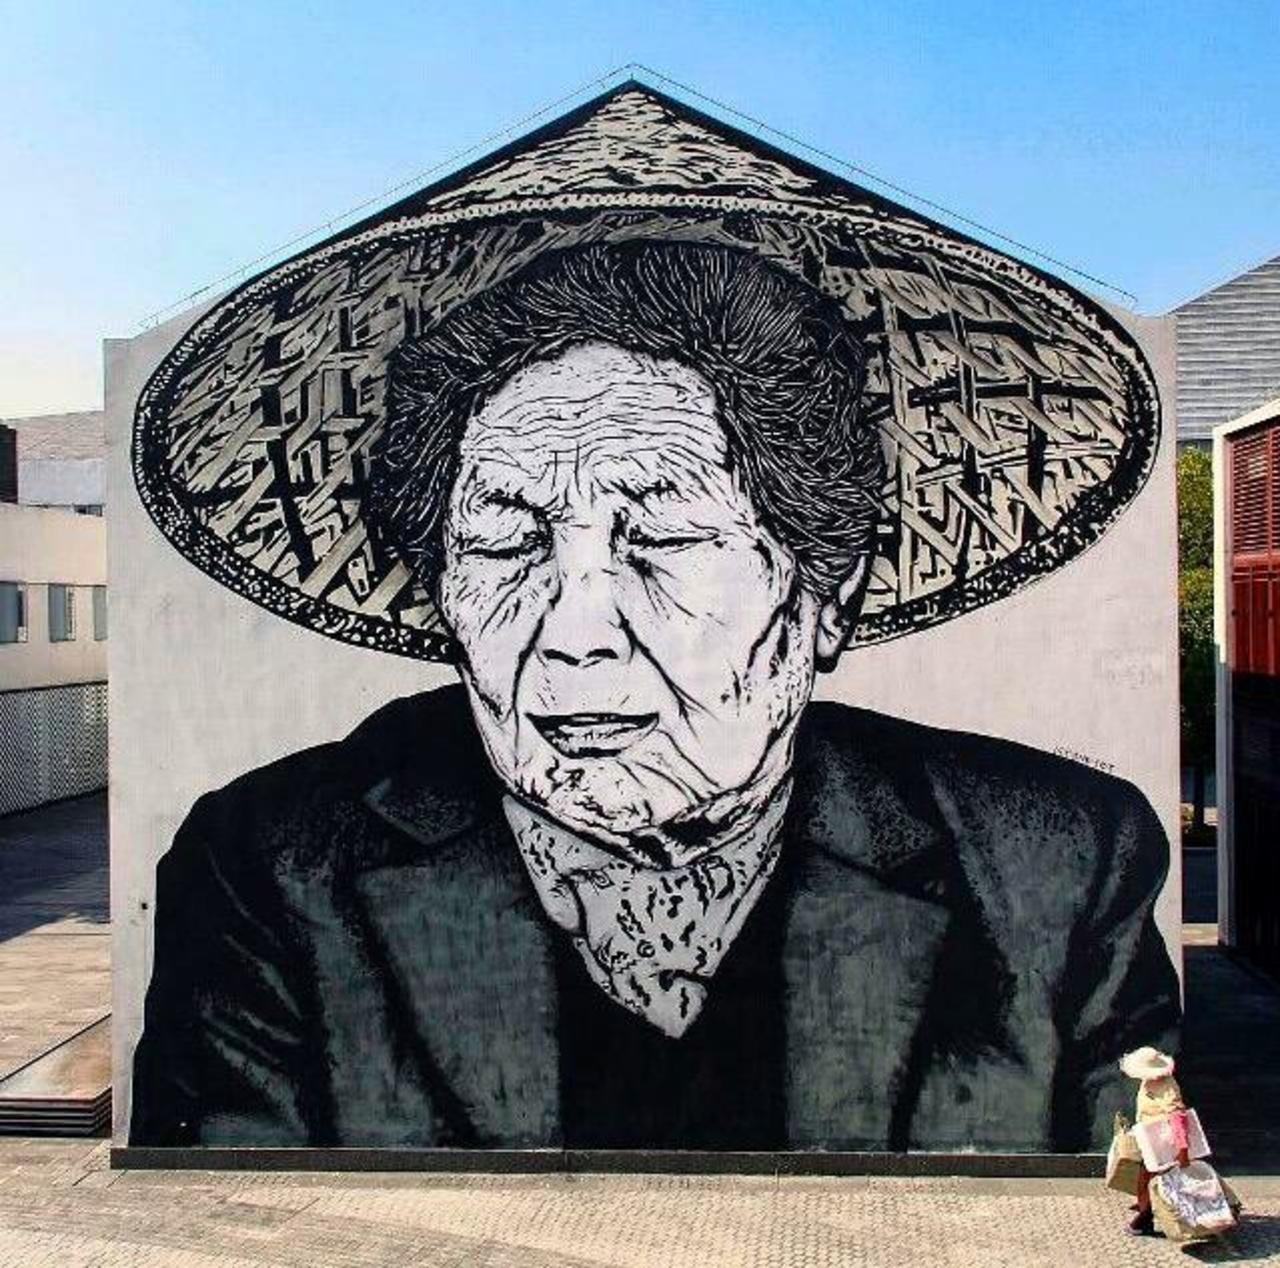 New Street Art by icy&sot in Shanghai  

#art #graffiti #mural #streetart http://t.co/X6HQHn92ua